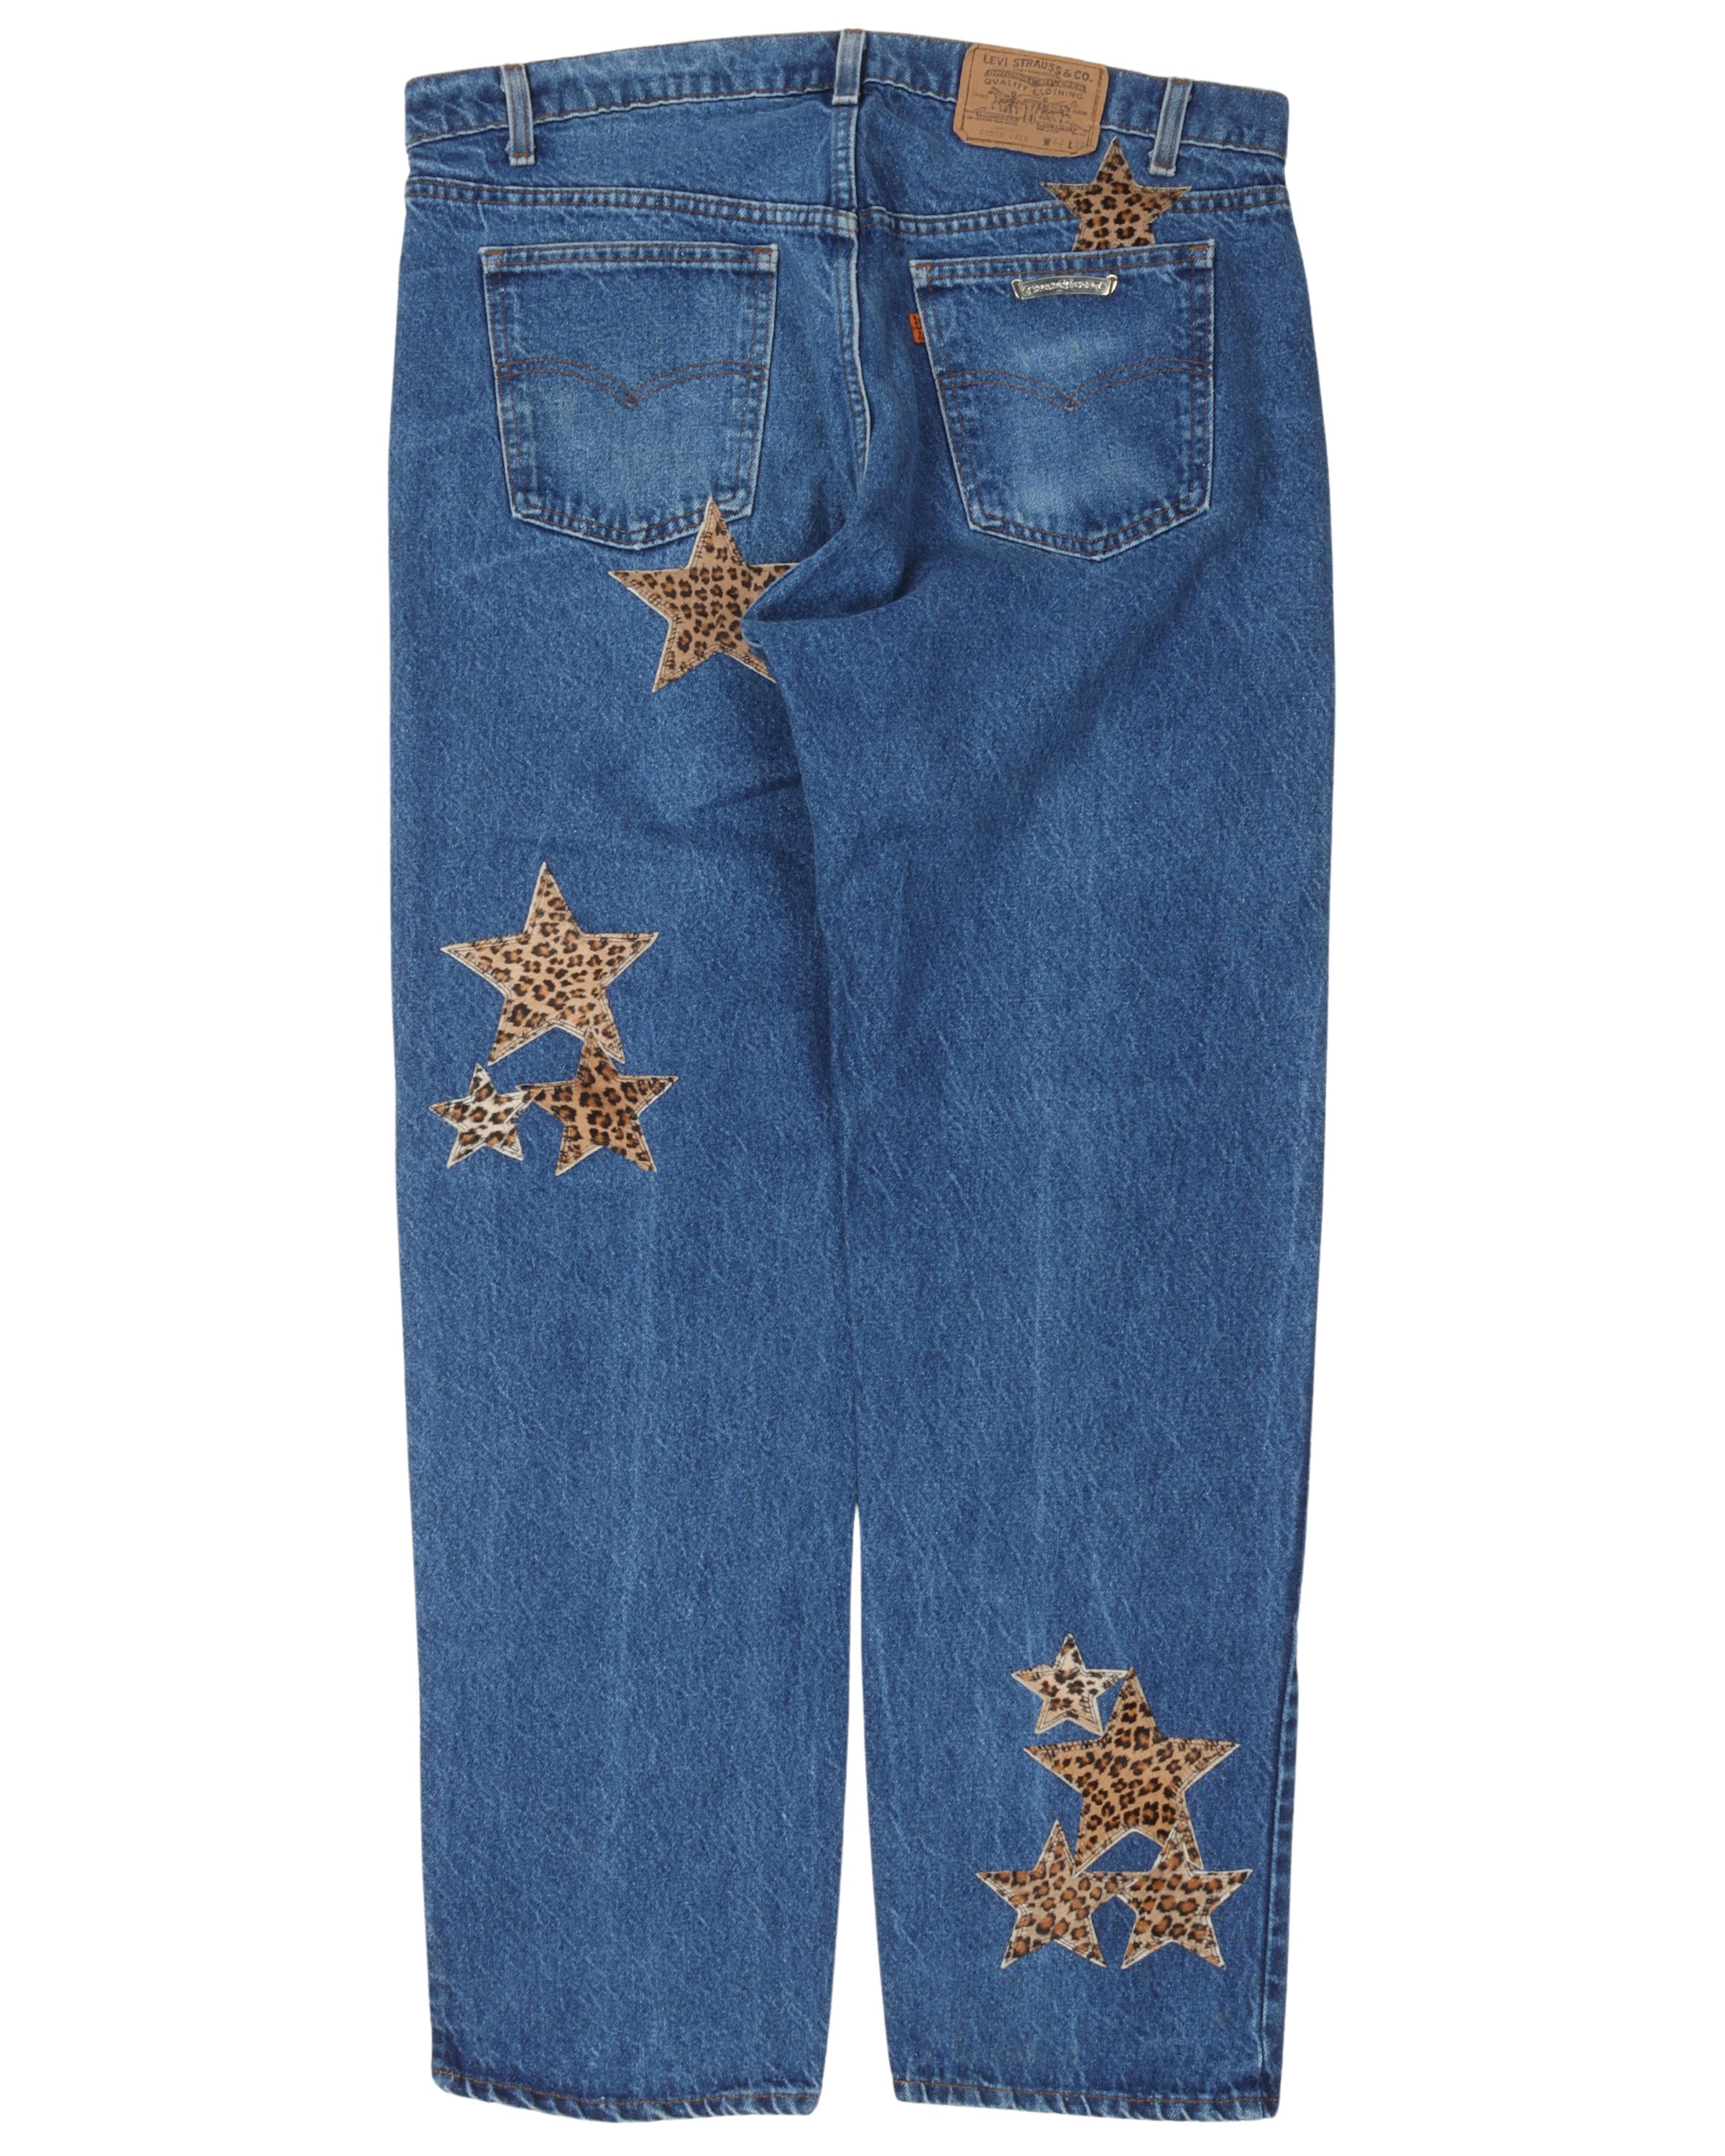 Levi's Star Patch Jeans